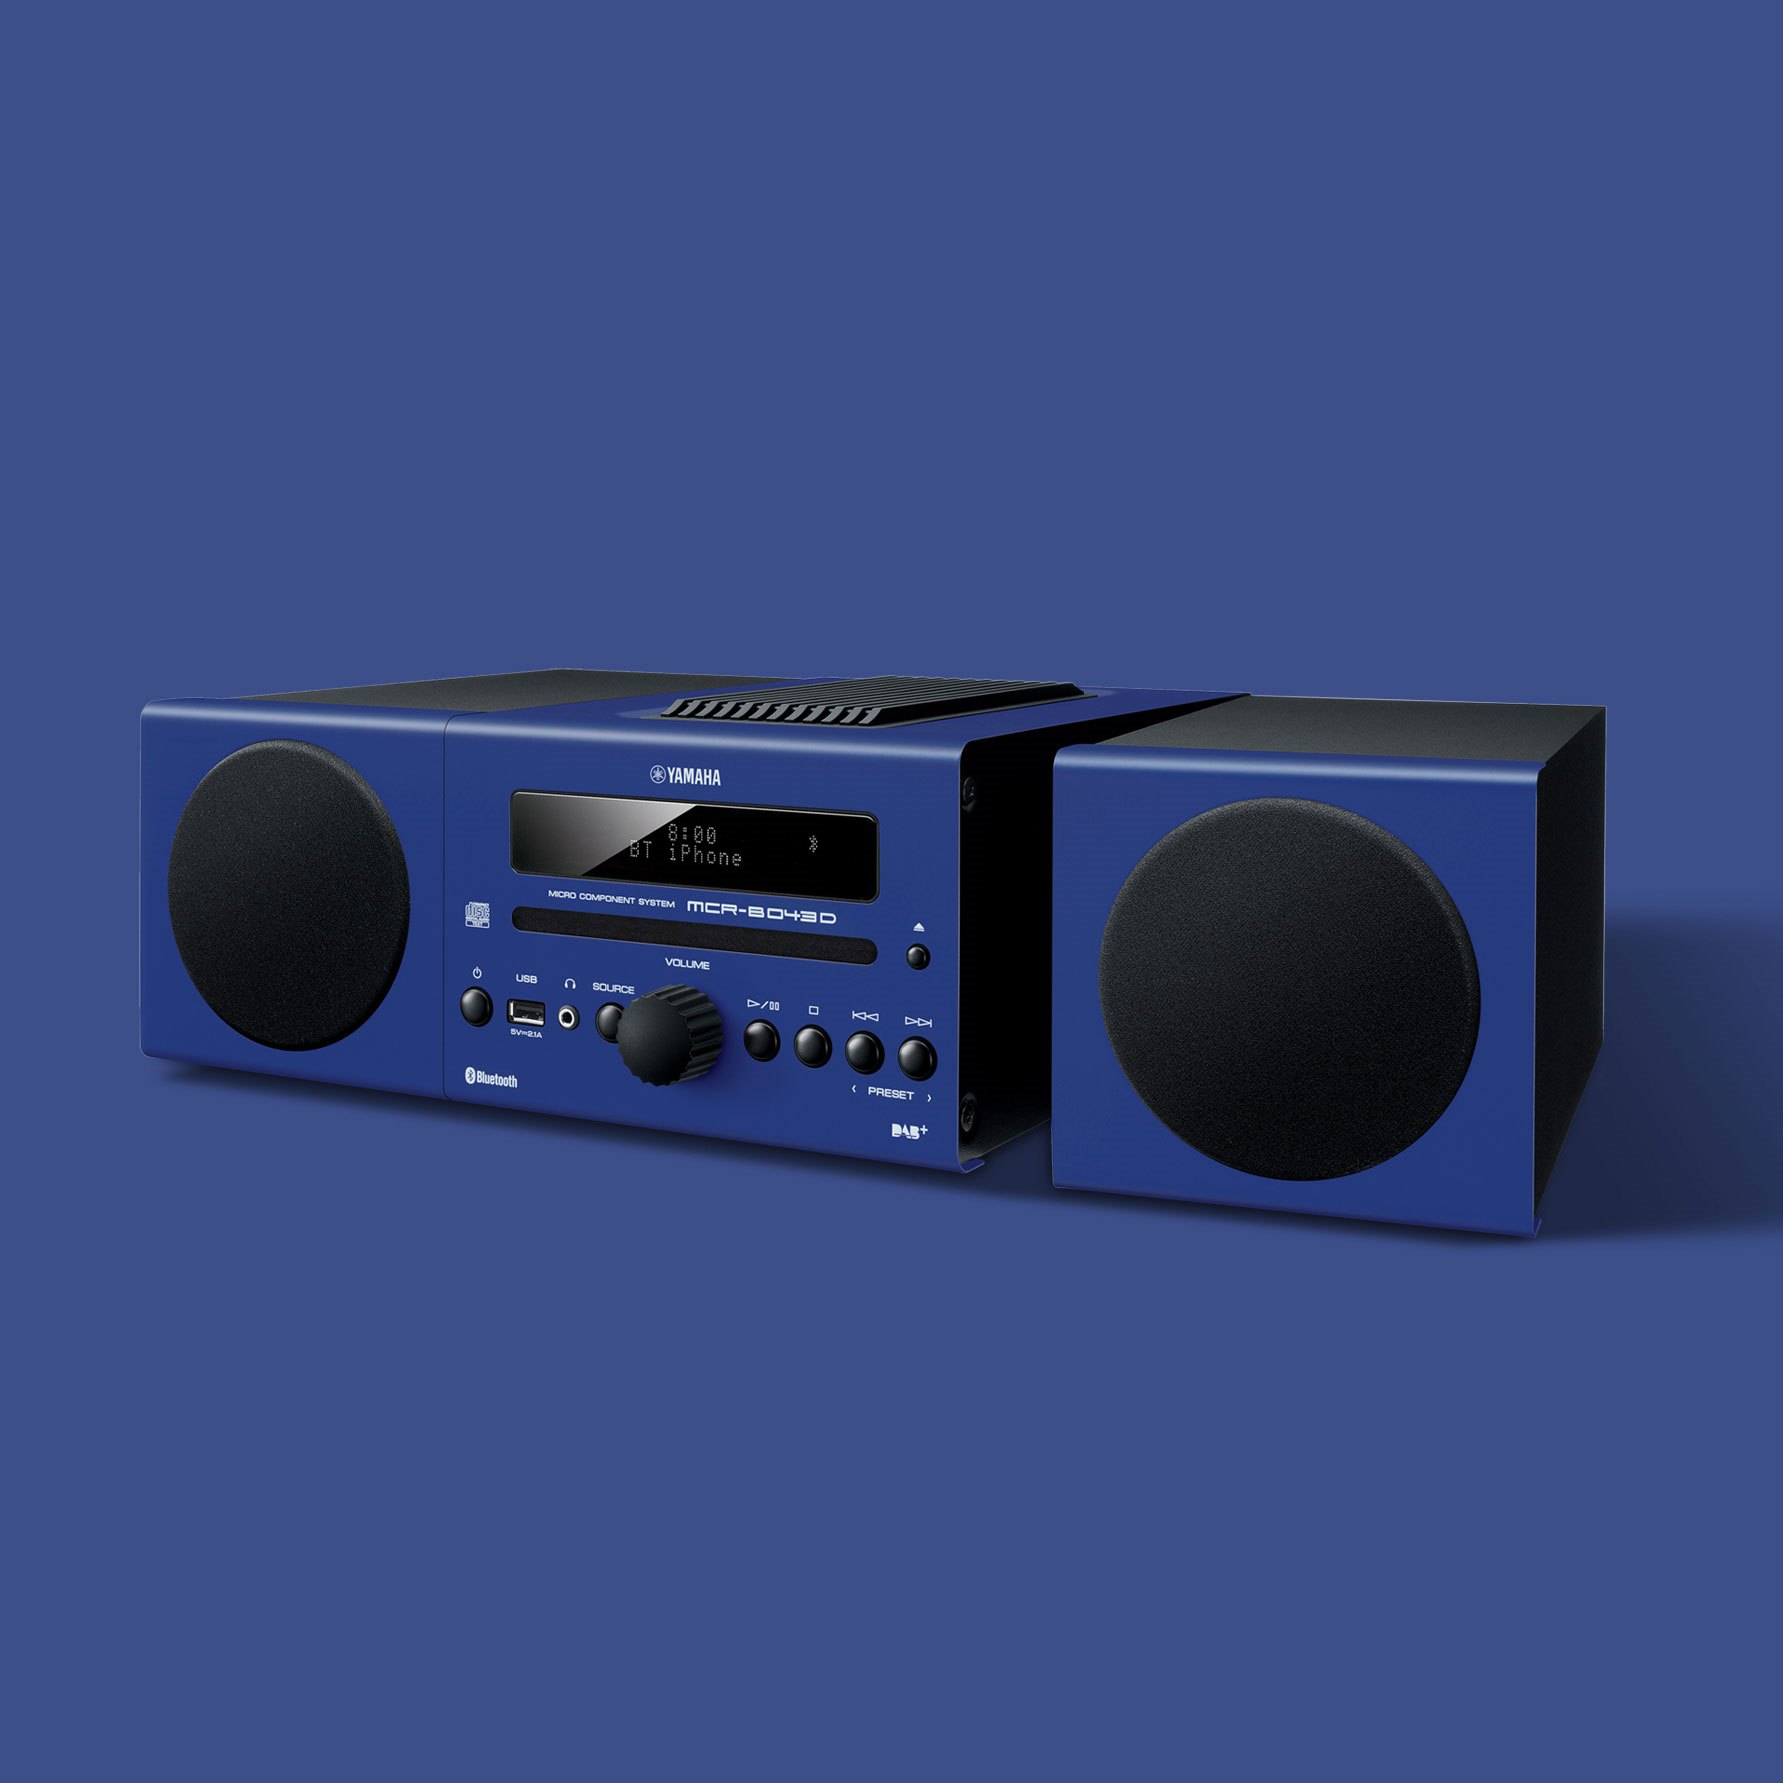 MCR-B043D - Specs - HiFi Systems - Audio & Visual - Products 